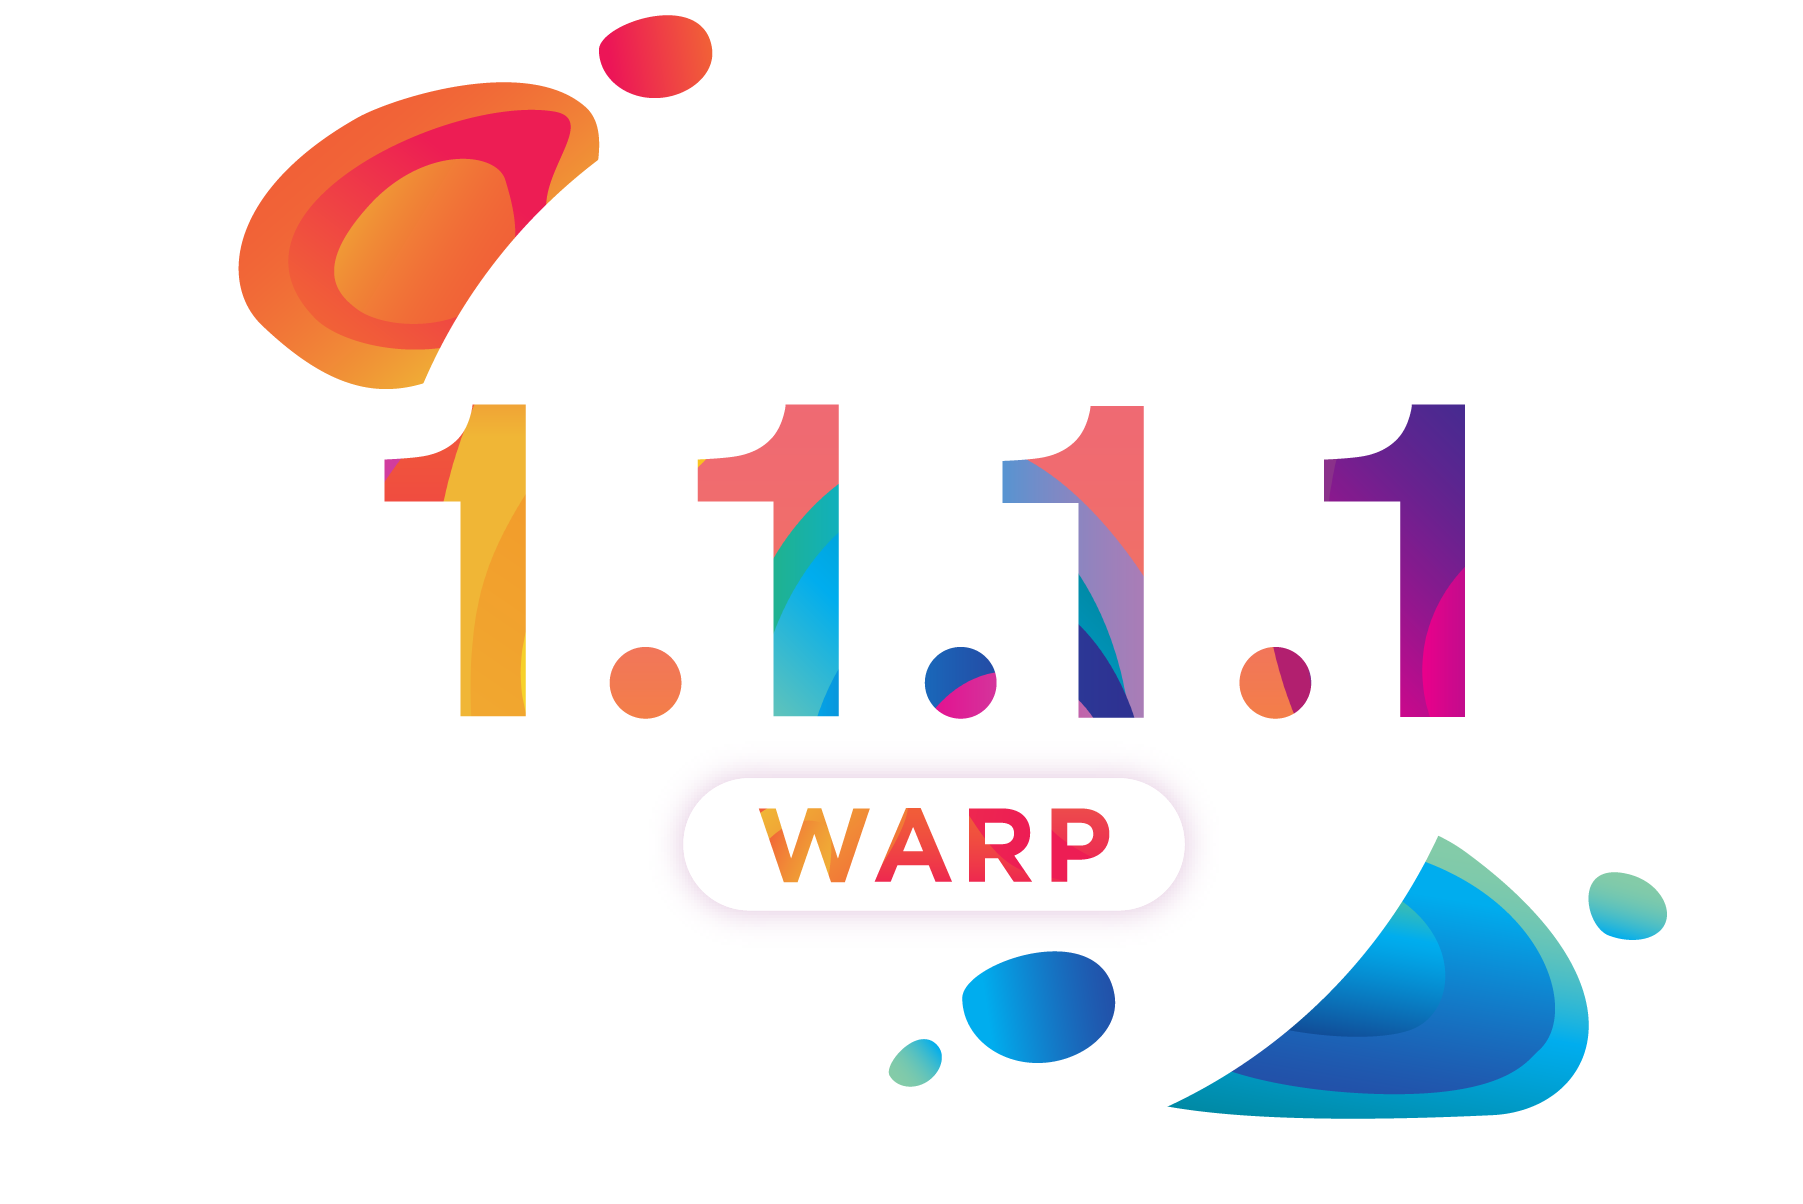 Warp cloudflare WARP, Cloudflare's